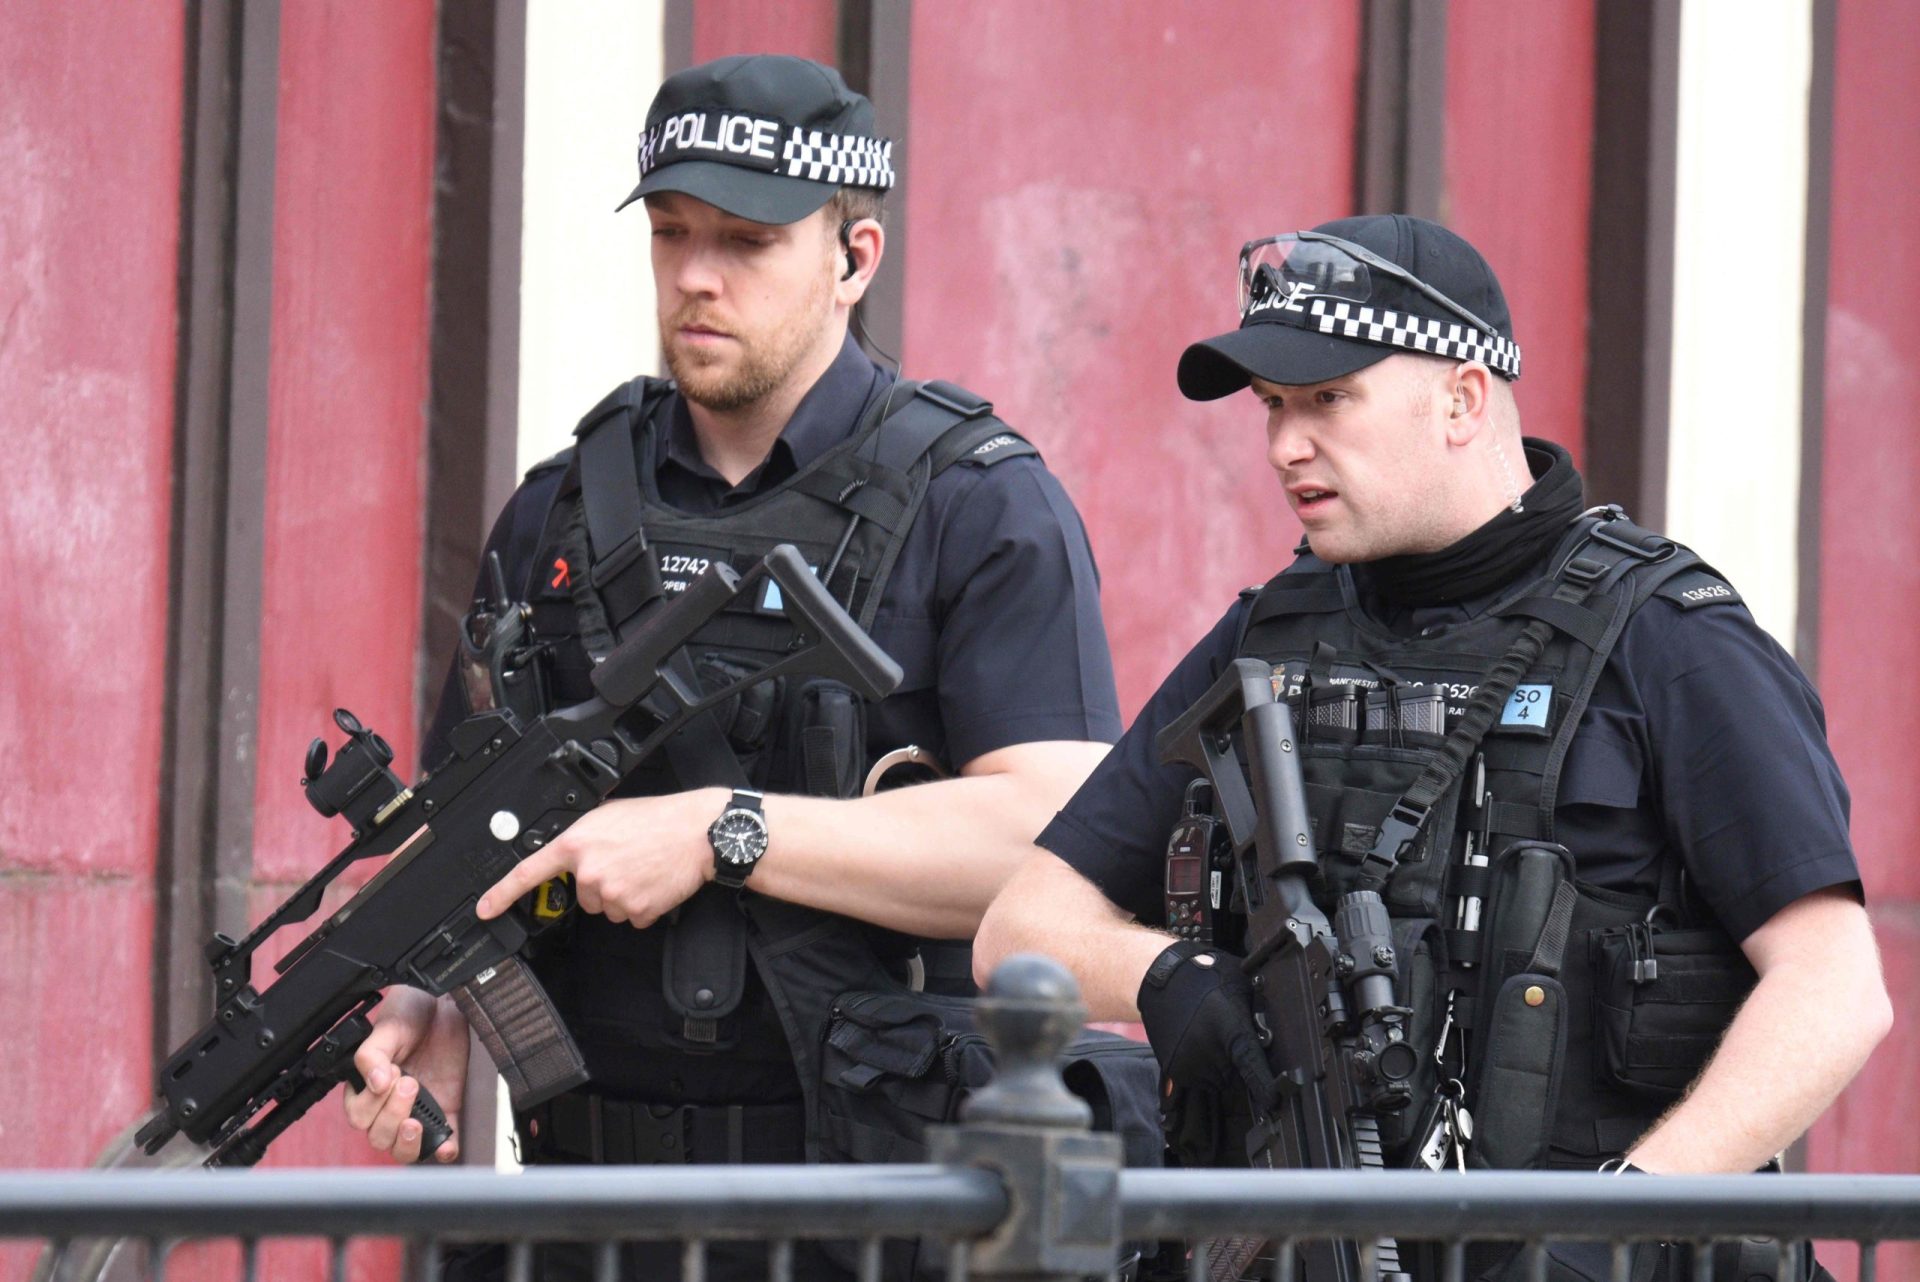 Daesh reinvidica ataque em Manchester